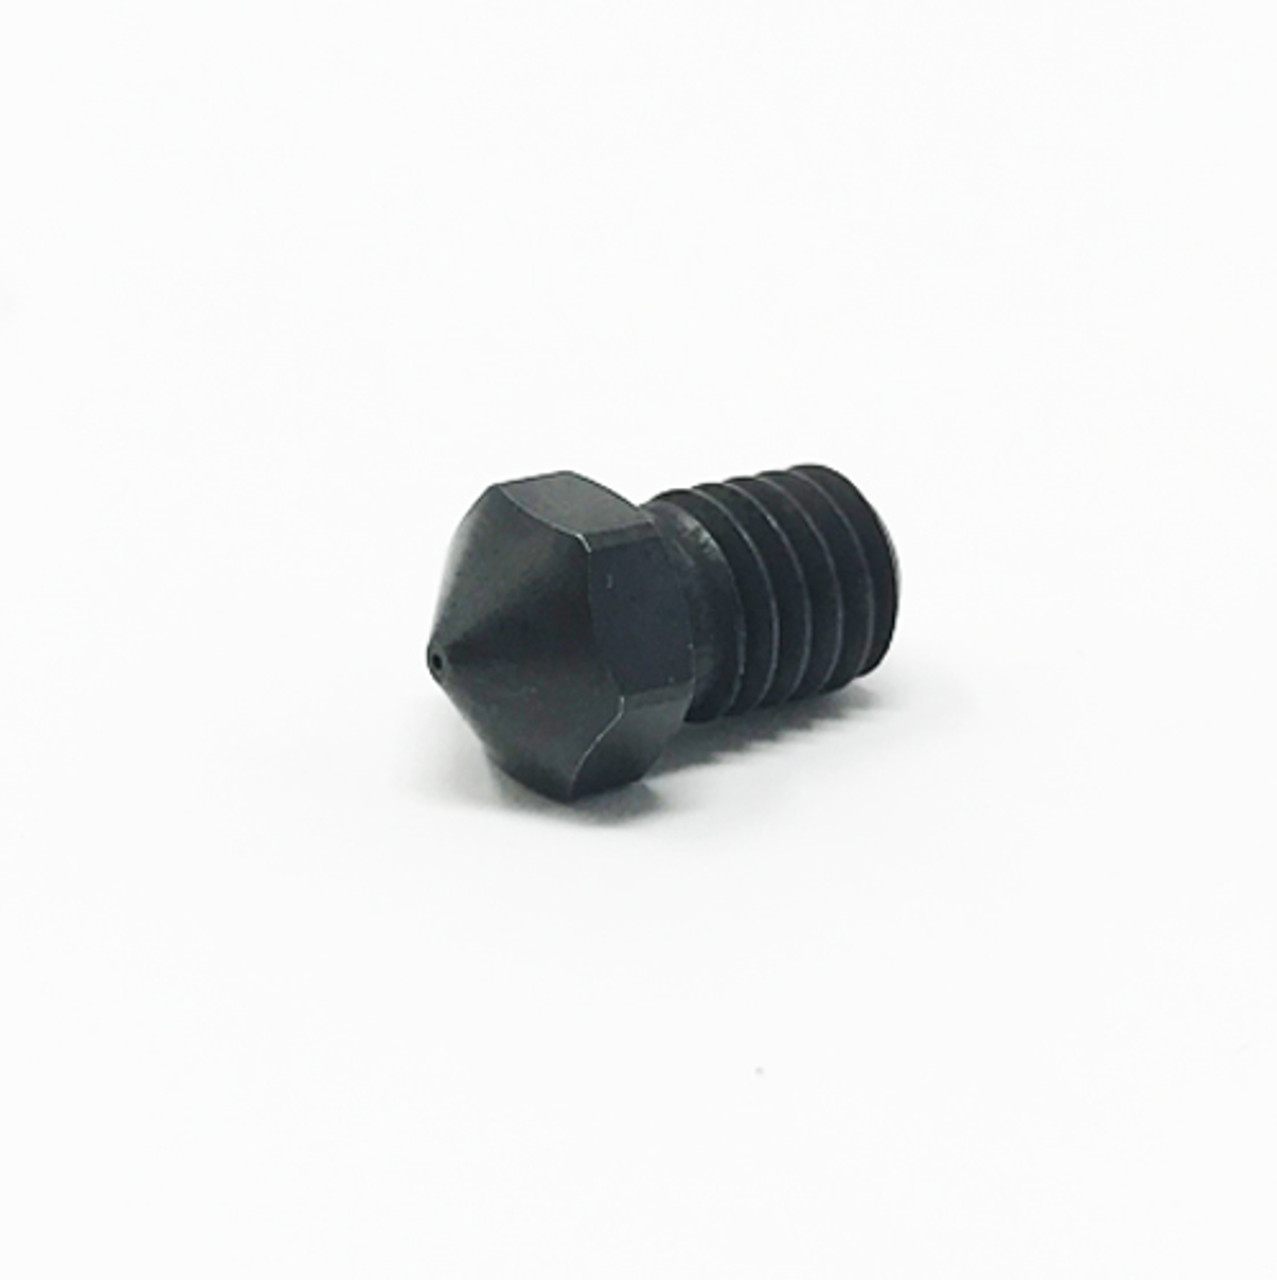 GO-3D 0.4mm Hardened Steel RepRap Nozzle for E3D V5 V6 / Prusa i3 MK2 M6 3D  Printer